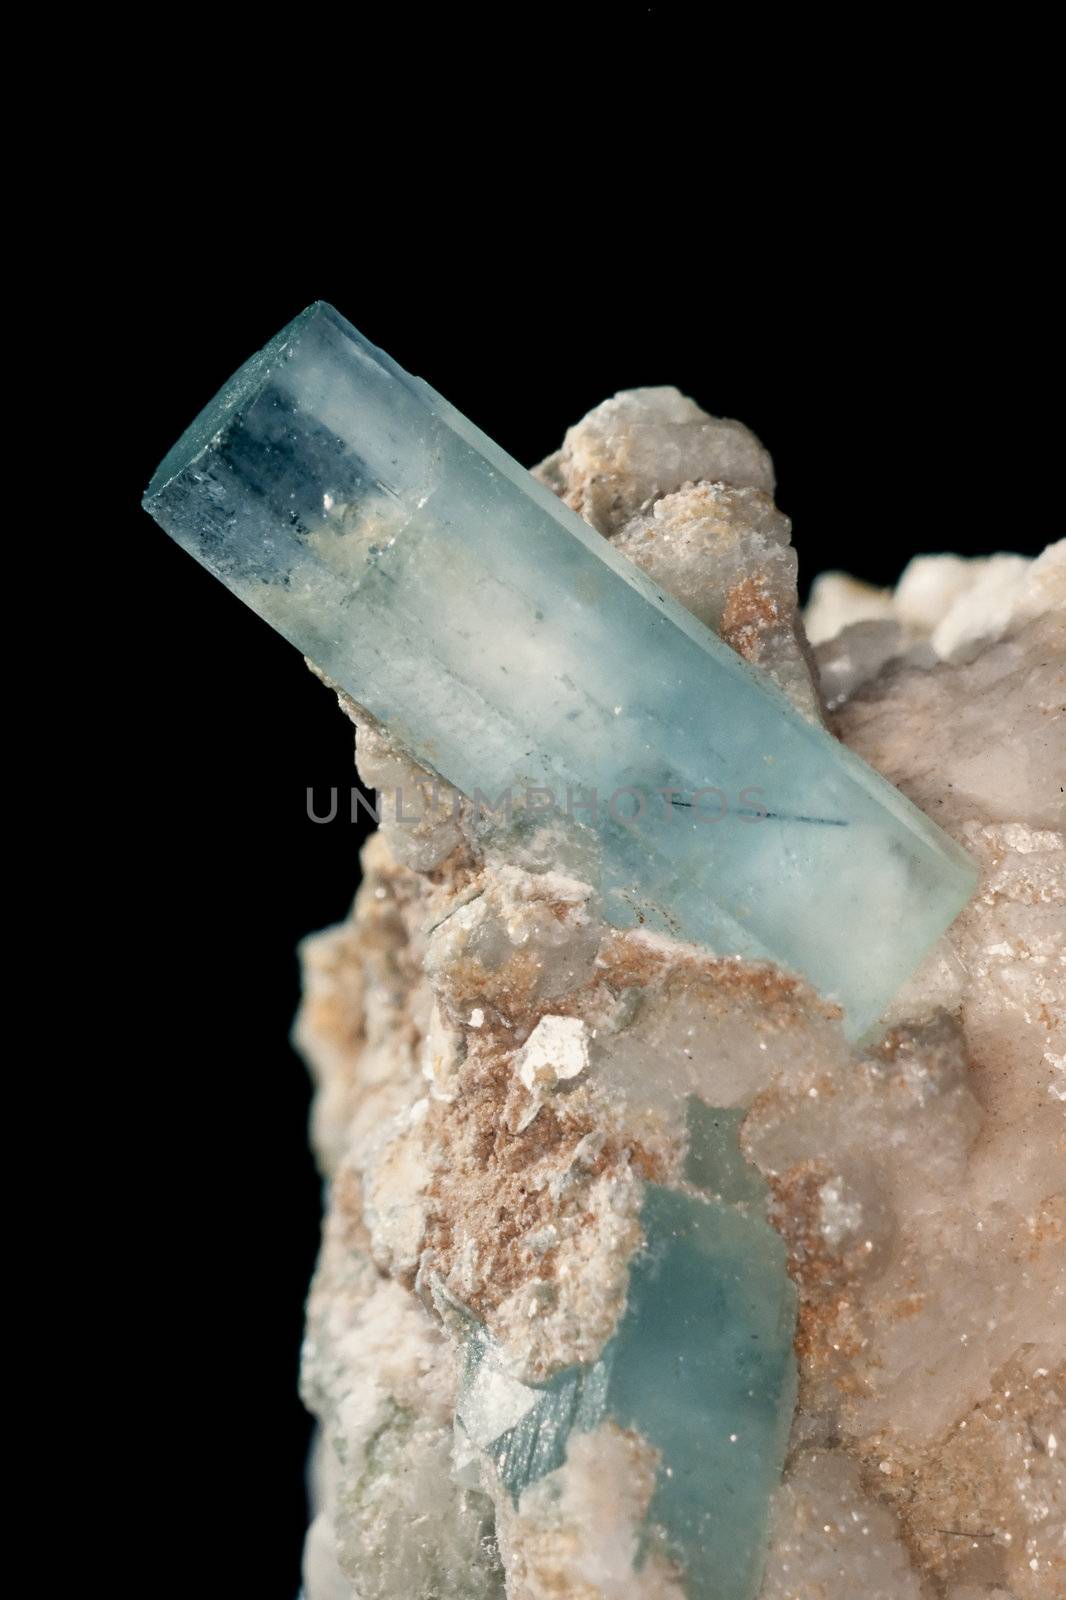 Big well formed Aquamarine crystals on matrix rock by PiLens